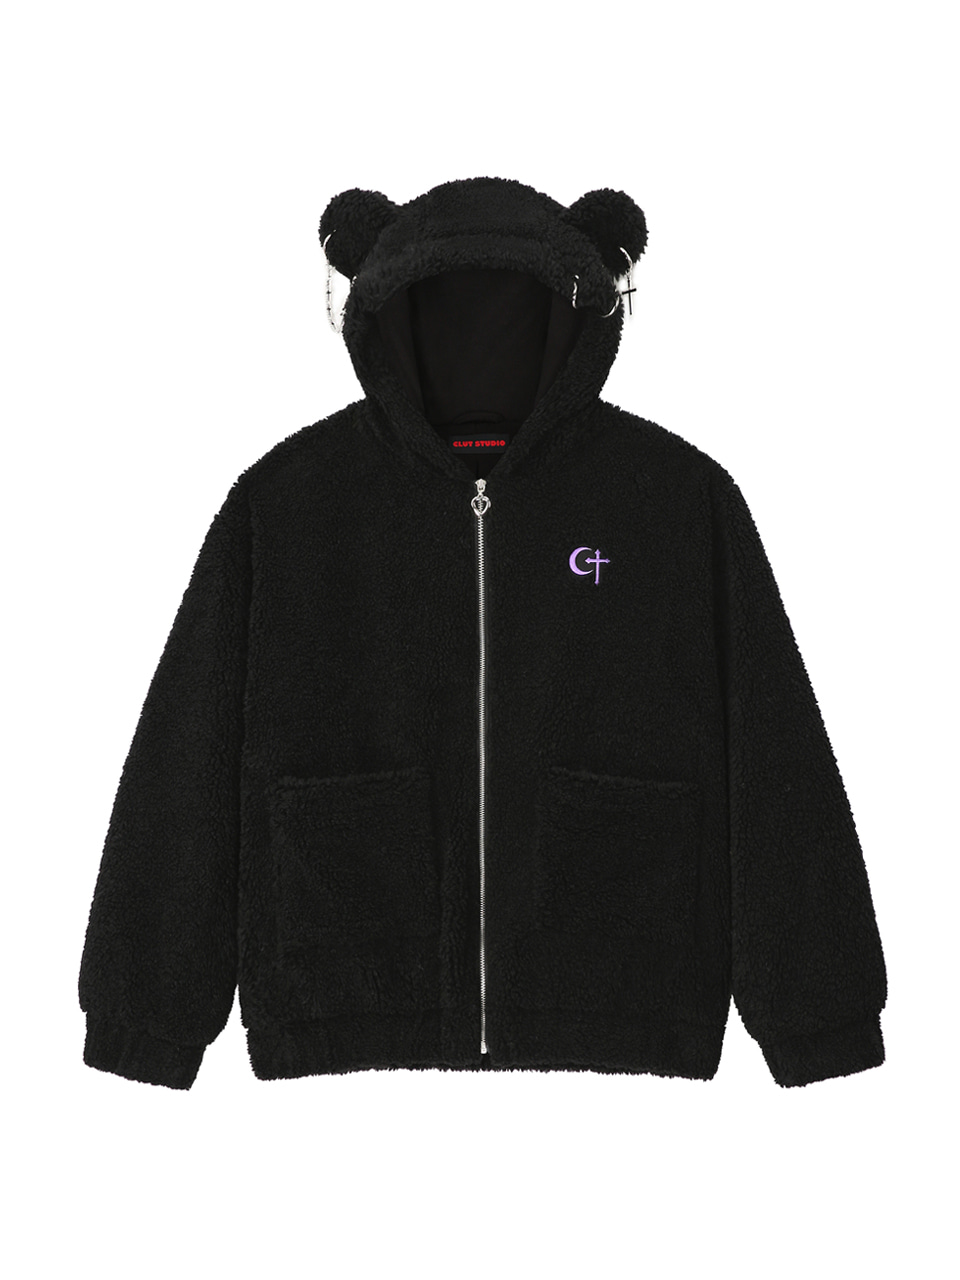 [sold out] 0 1 punk bear fleece jacket - BLACK